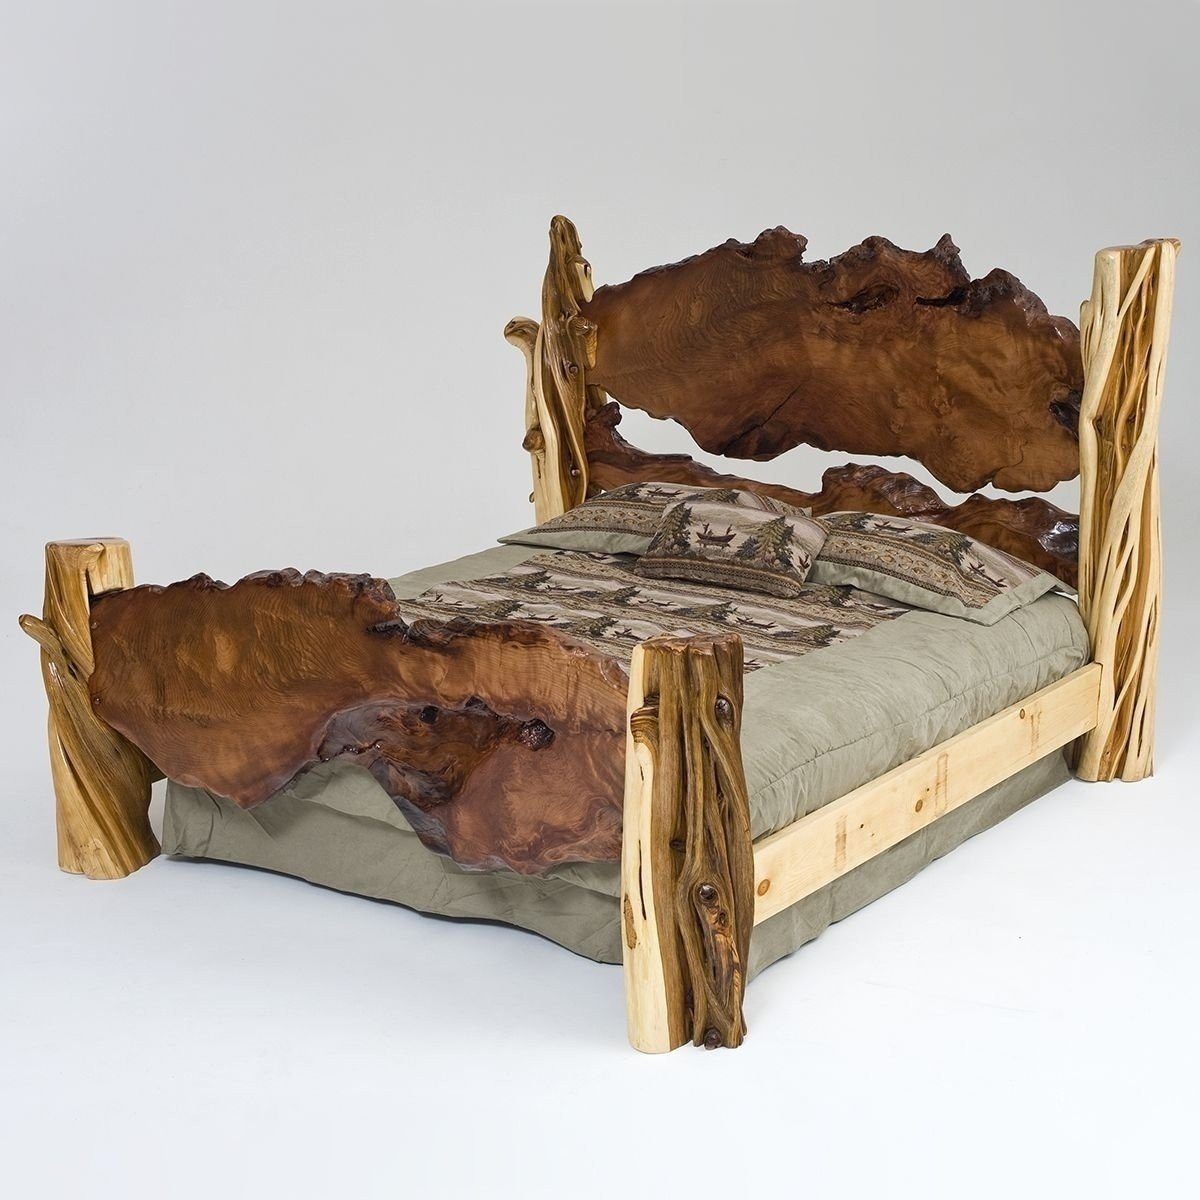 Rustic Log Bedroom Furniture
 Rustic Log Bed Log Beds